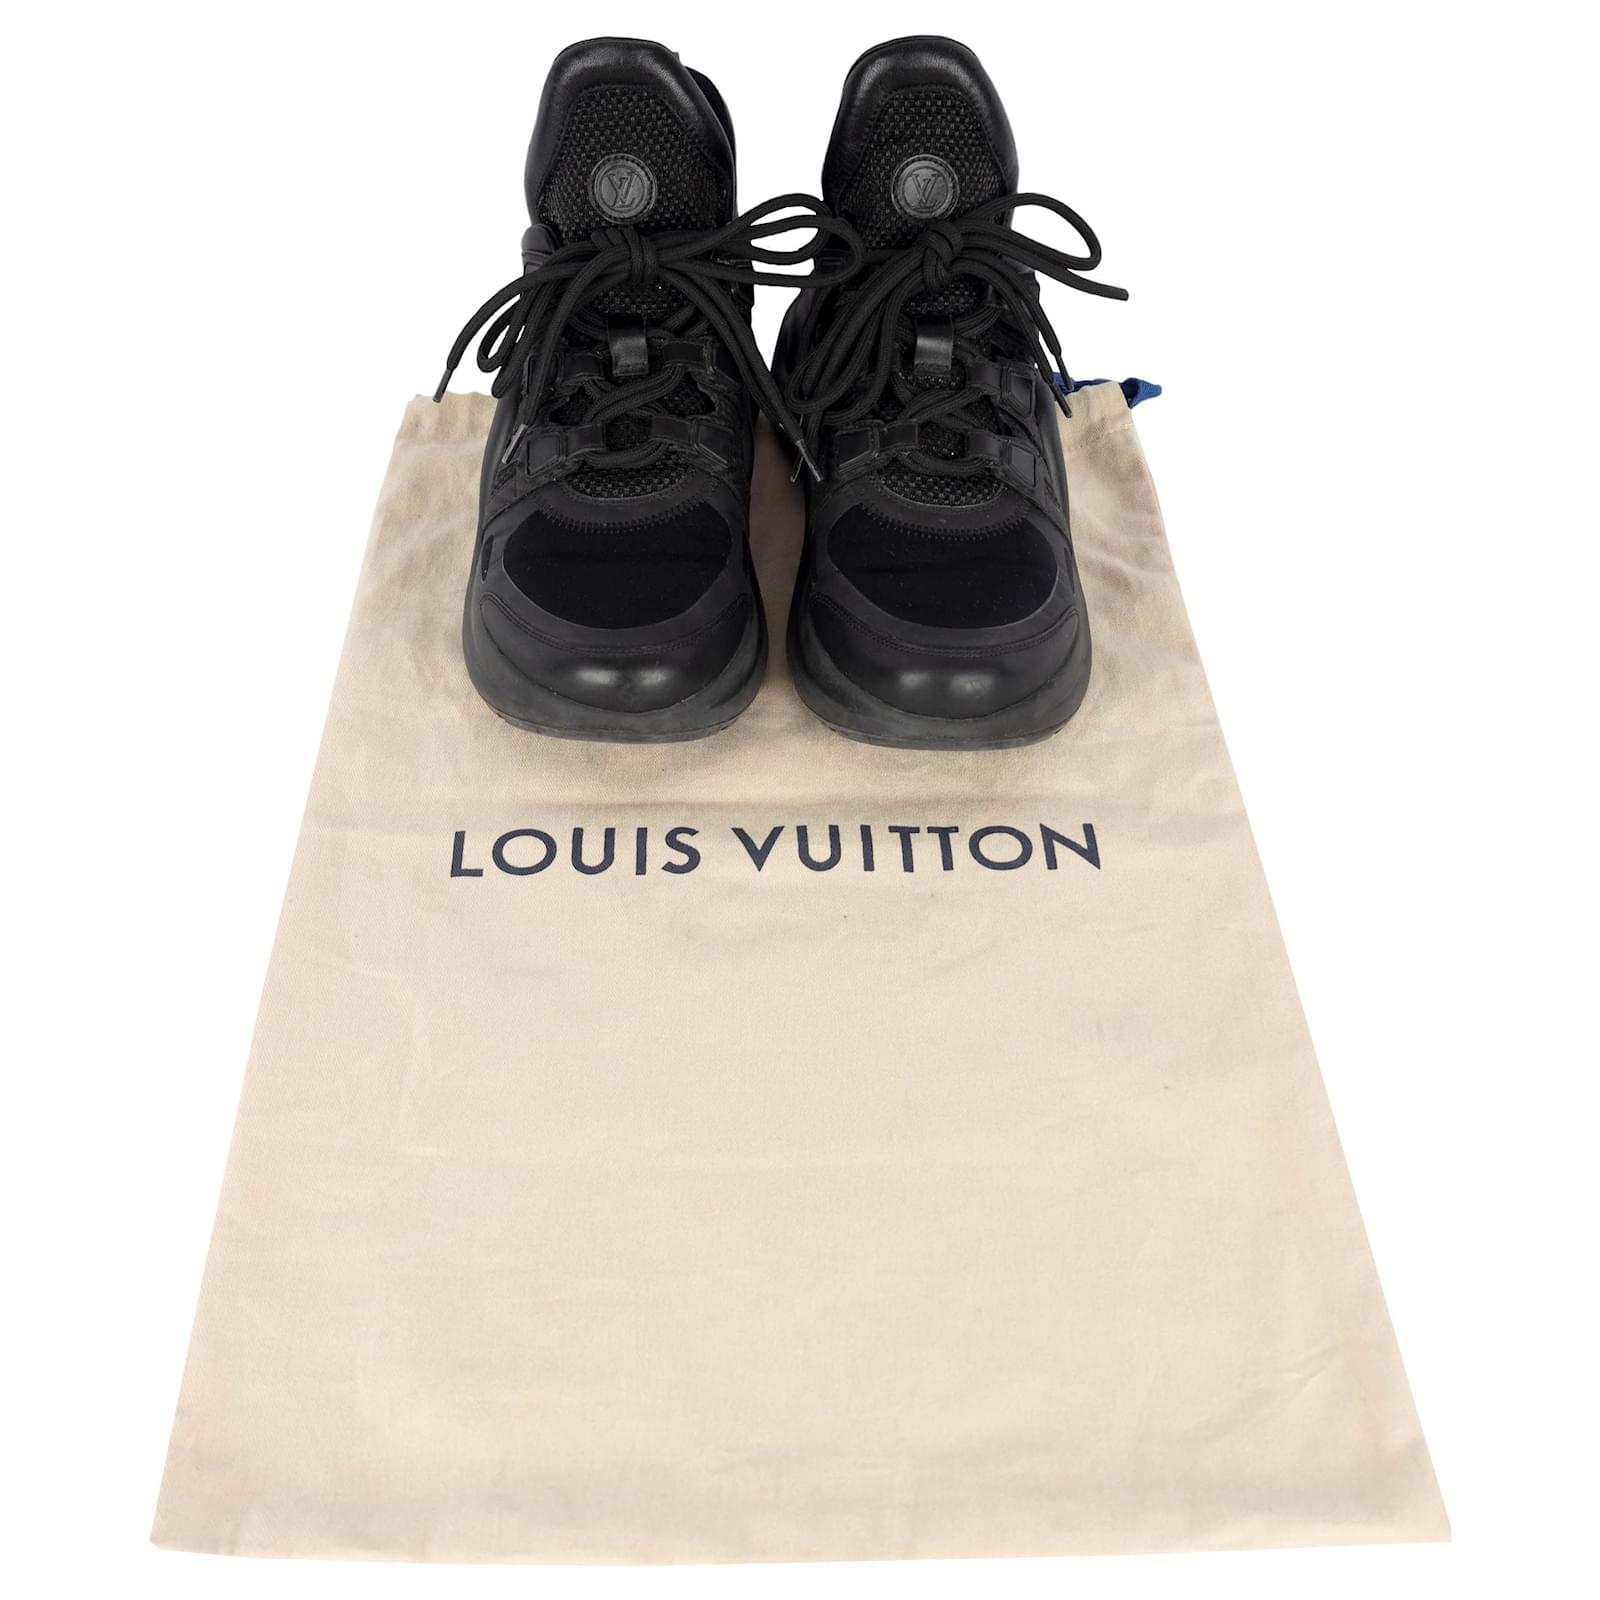 Louis Vuitton Archlight Trainer Black White (Women's) - 1A43K8 - GB